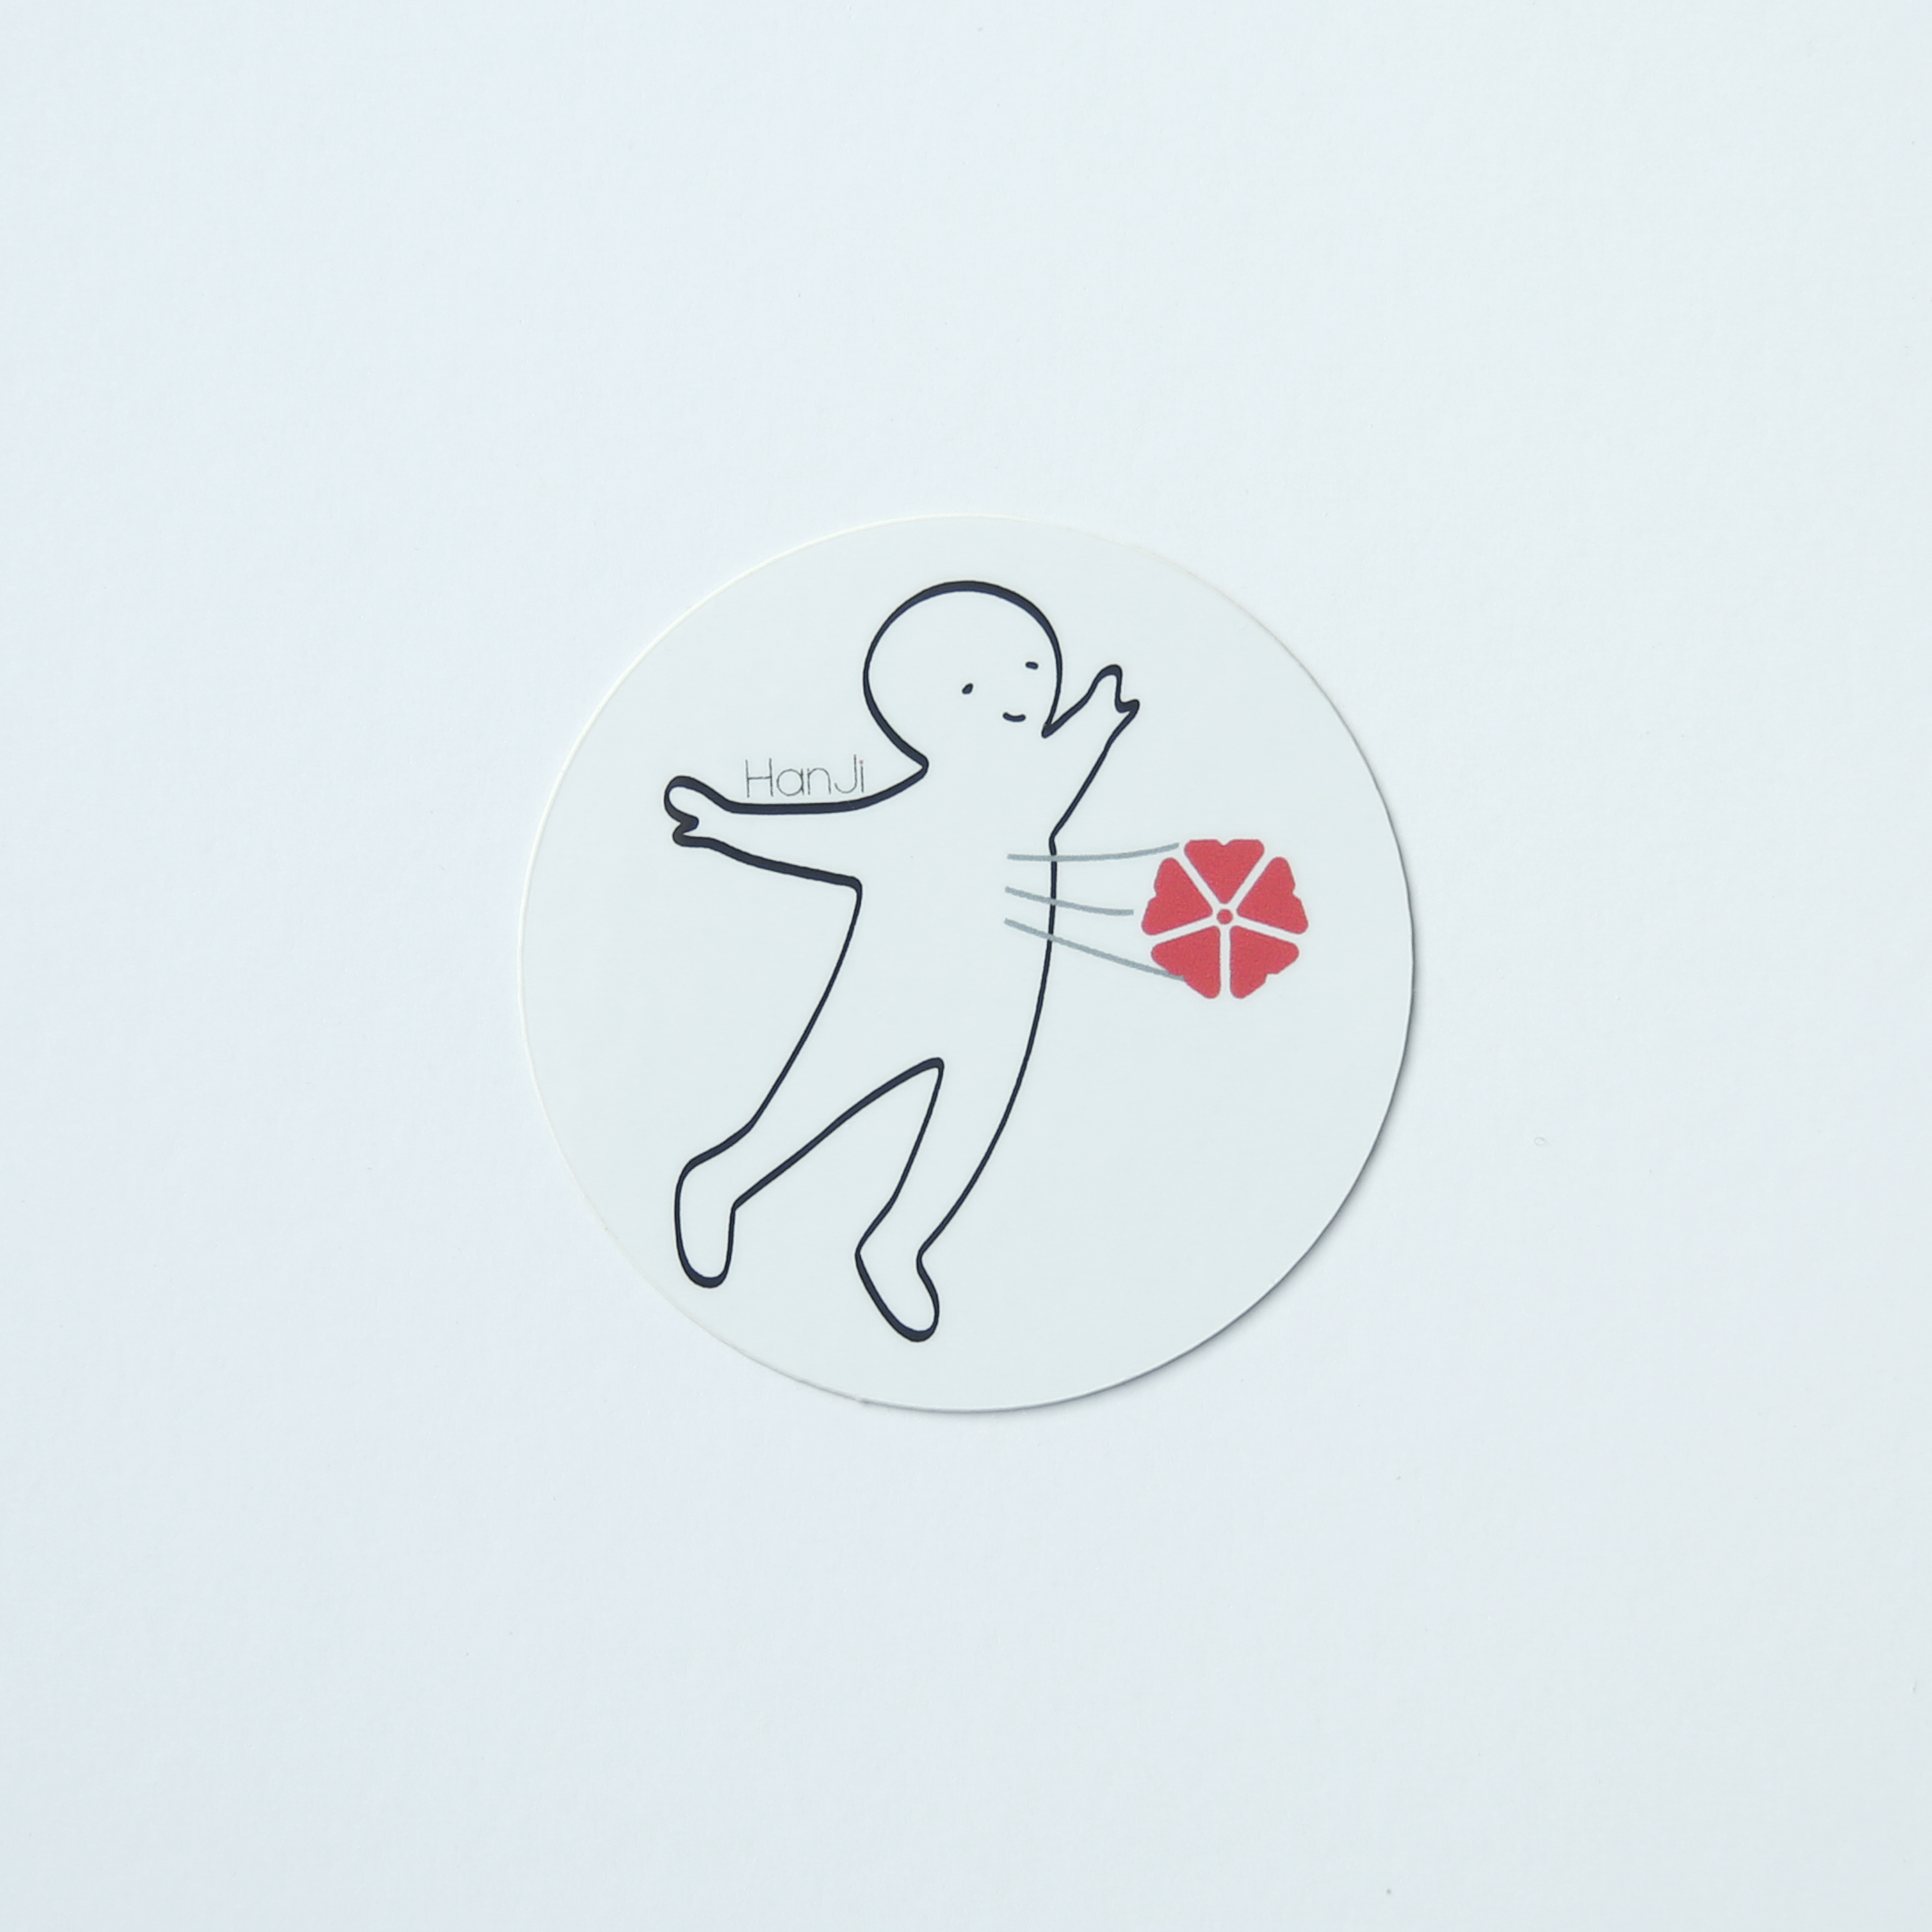 Waterproof sticker with HanJi logo and little human